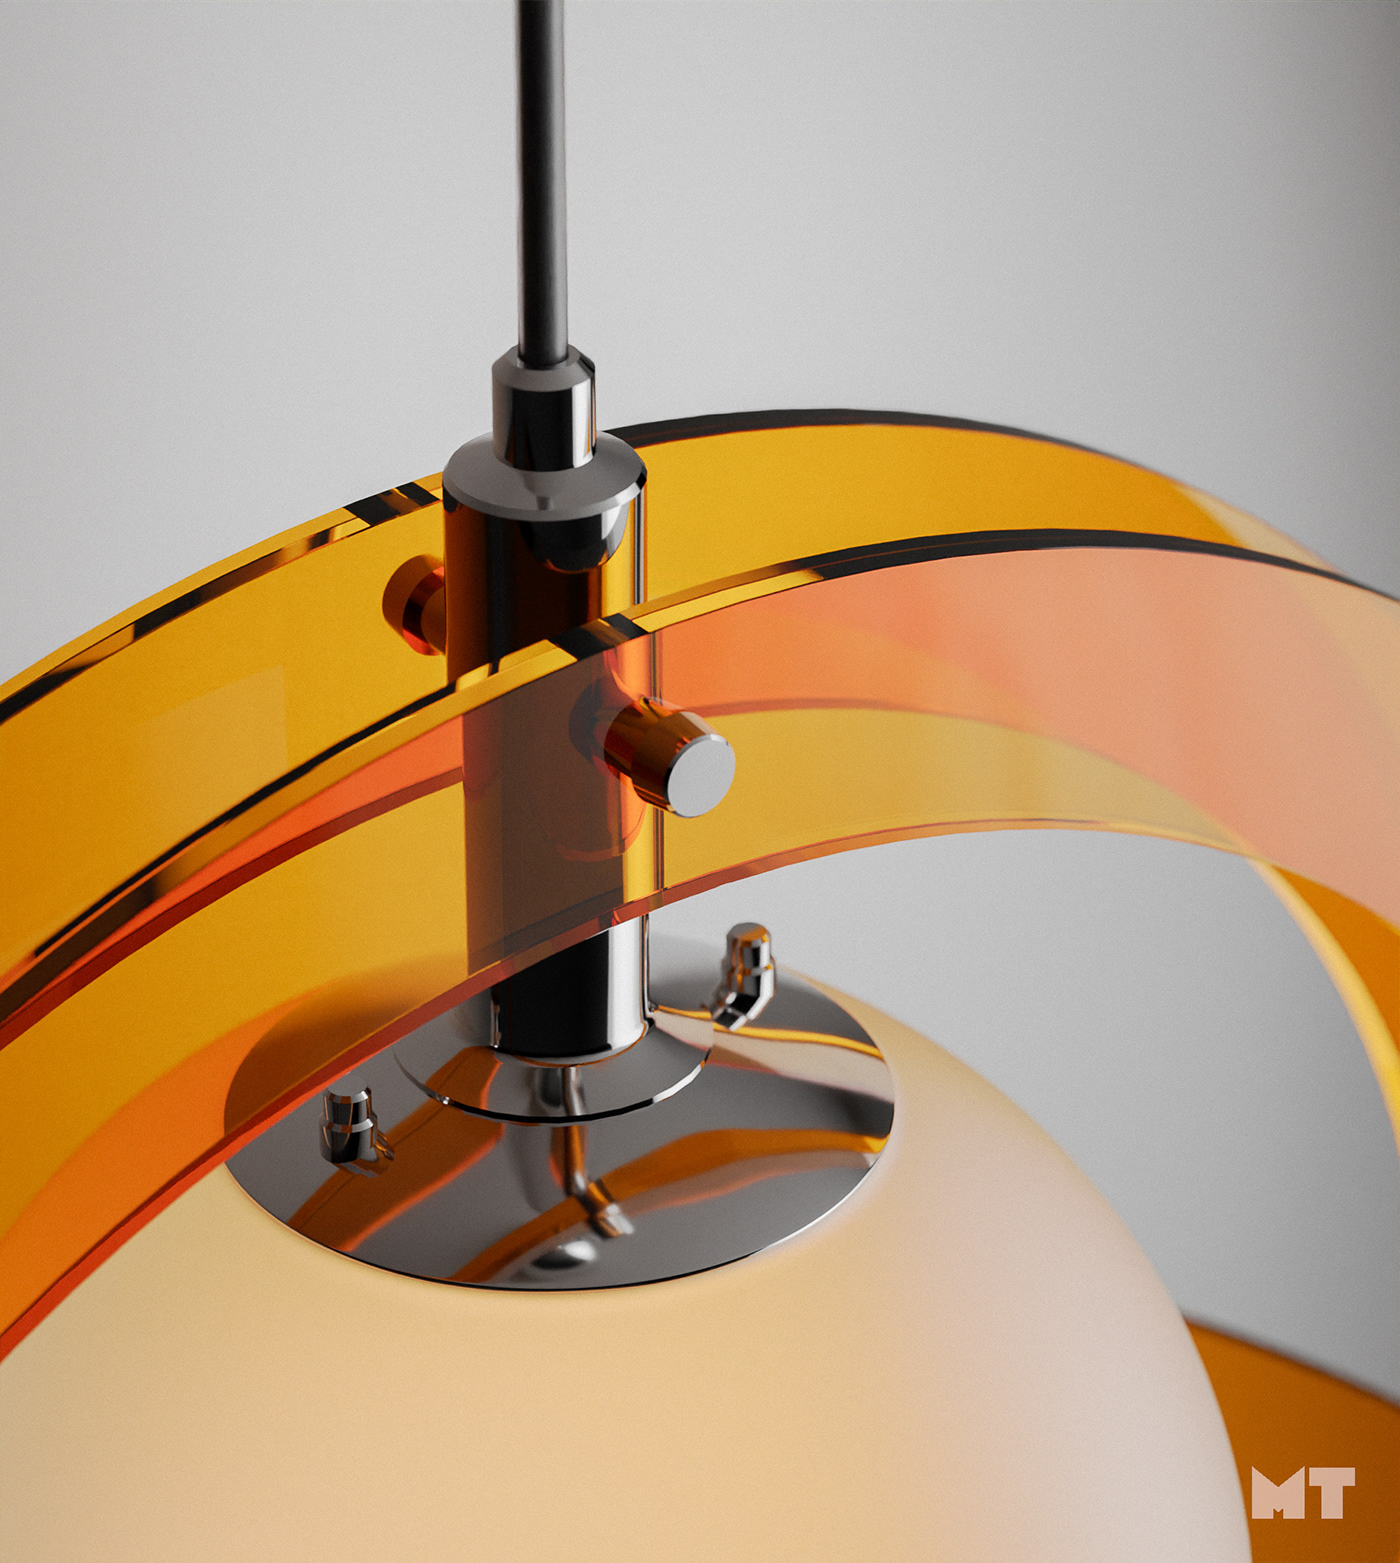 blender 3D b3d Render Product Rendering space age Lamp lighting opal plexiglass